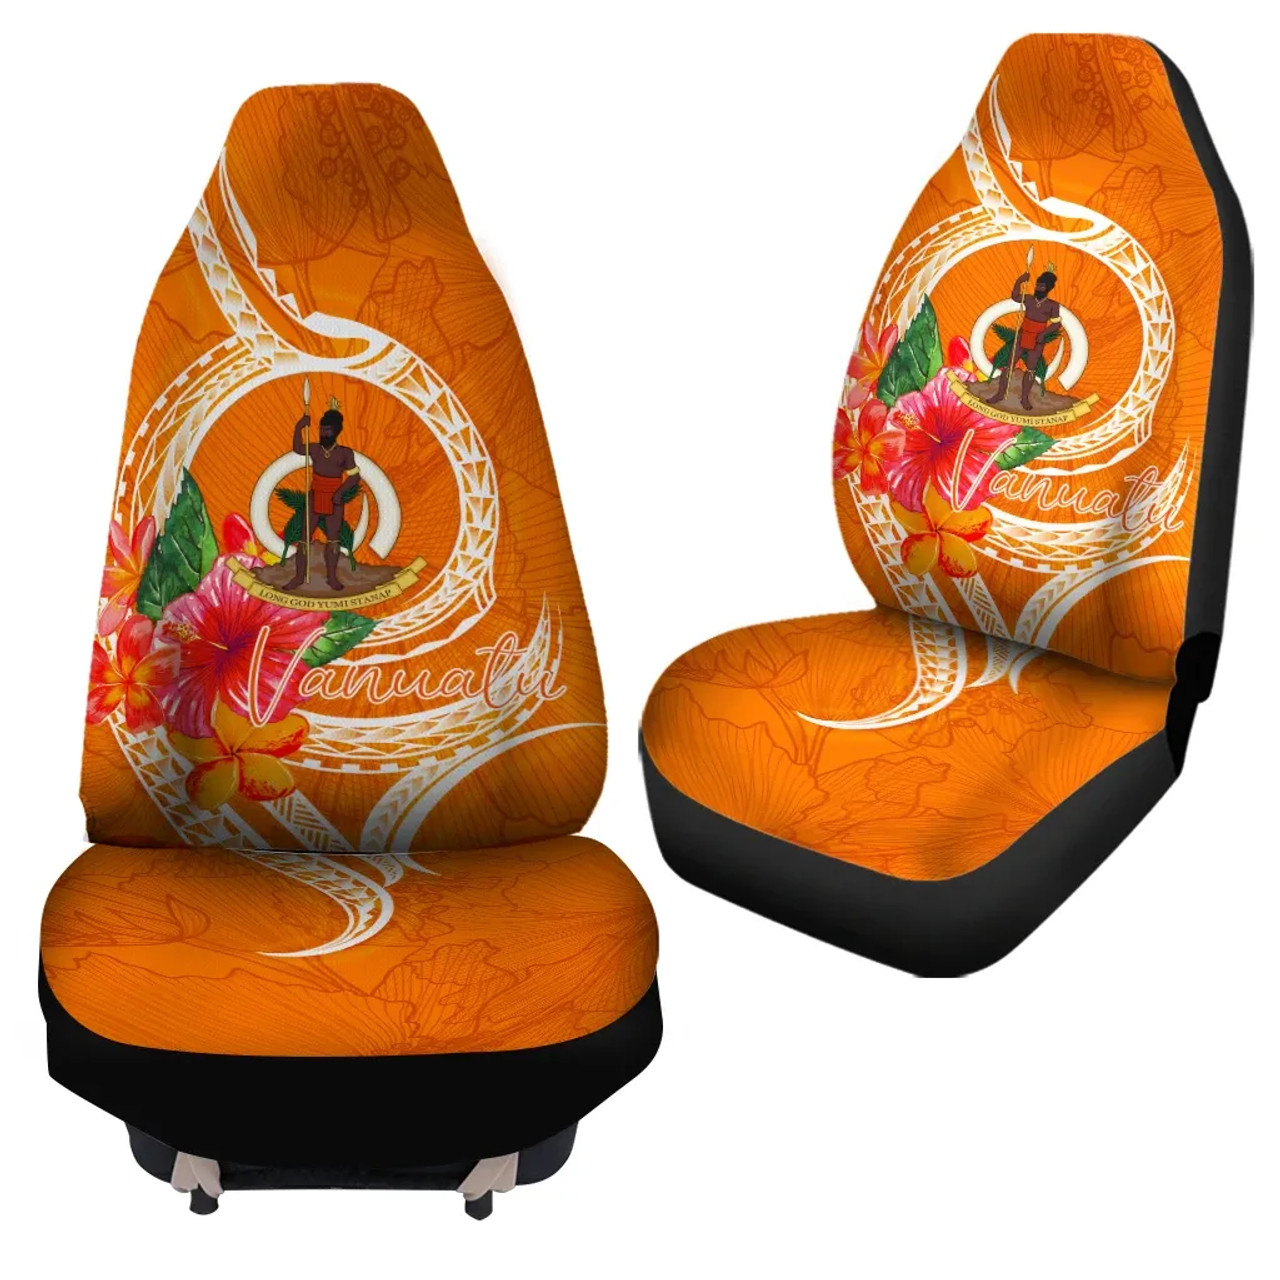 Vanuatu Polynesian Car Seat Covers - Orange Floral With Seal